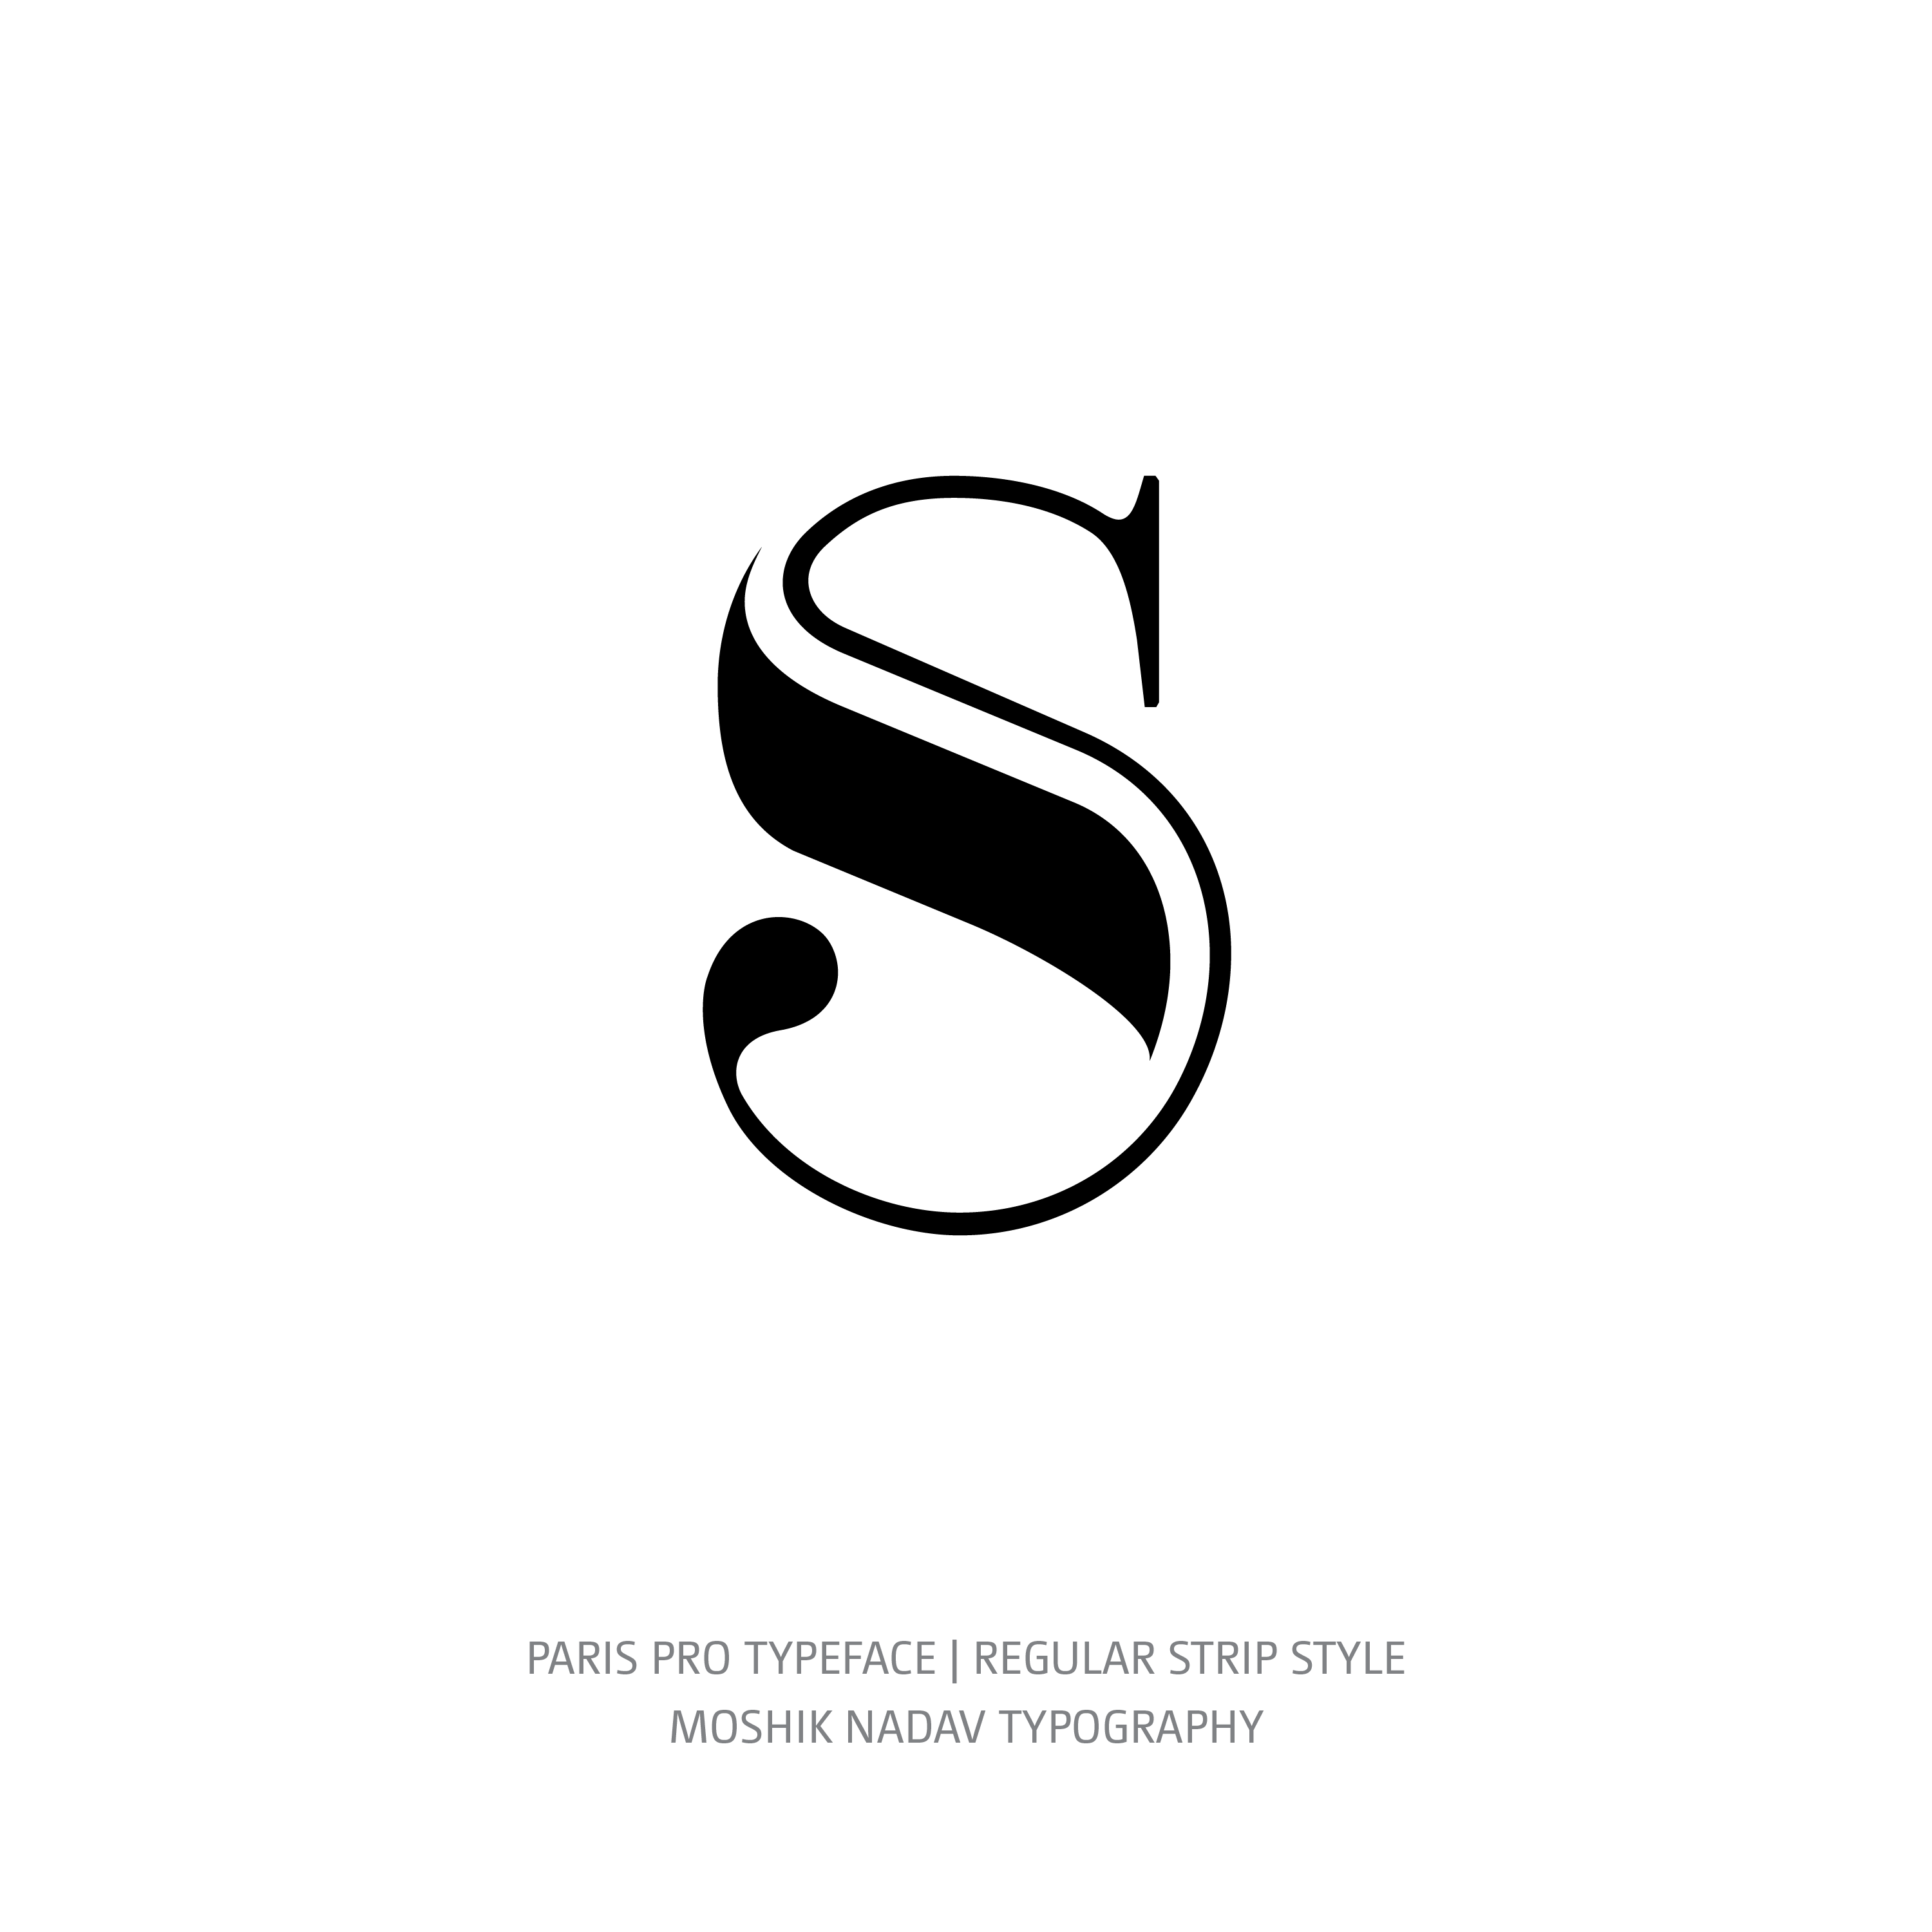 Paris Pro Typeface Regular Strip s